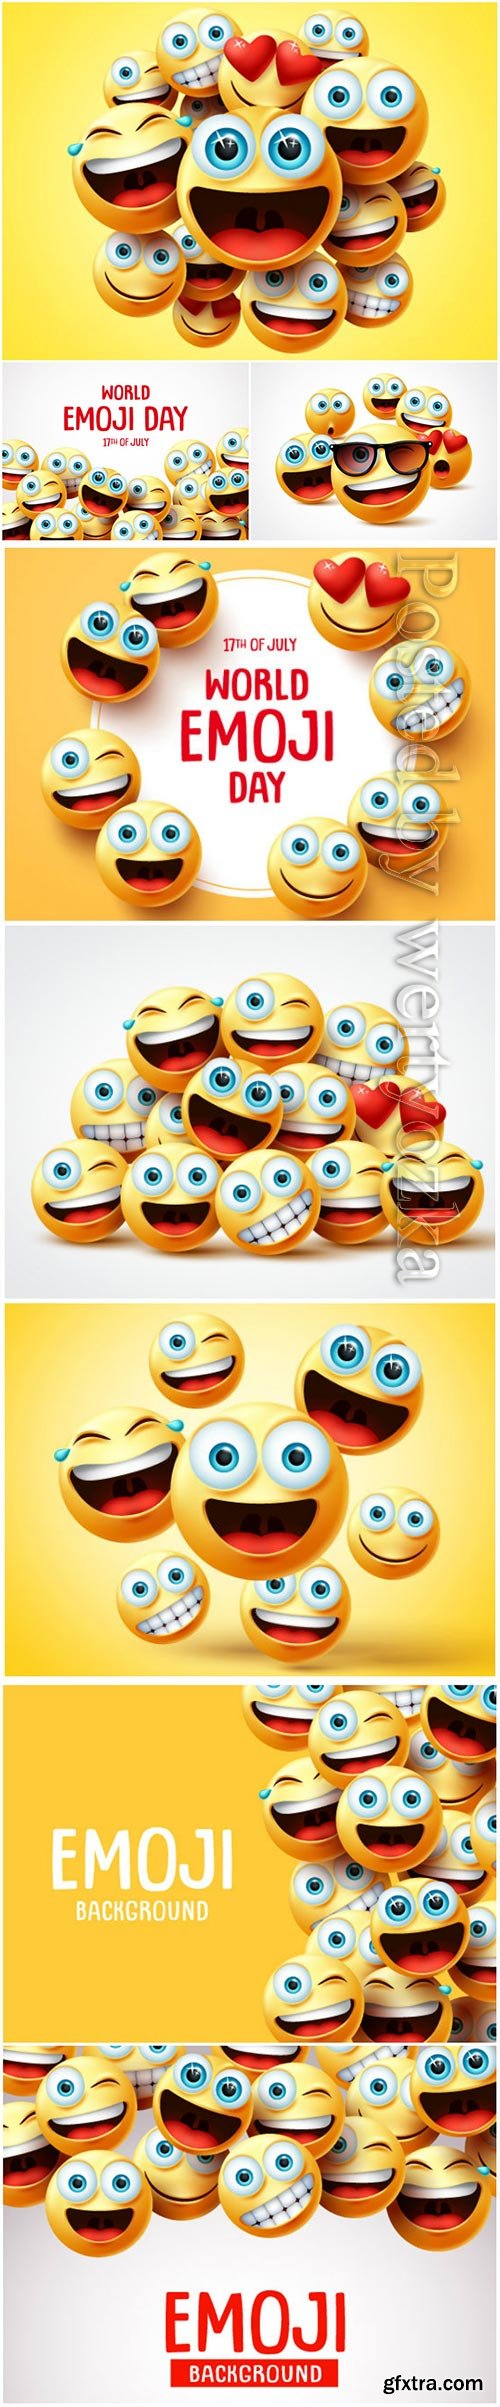 Smiley emoji faces group vector design